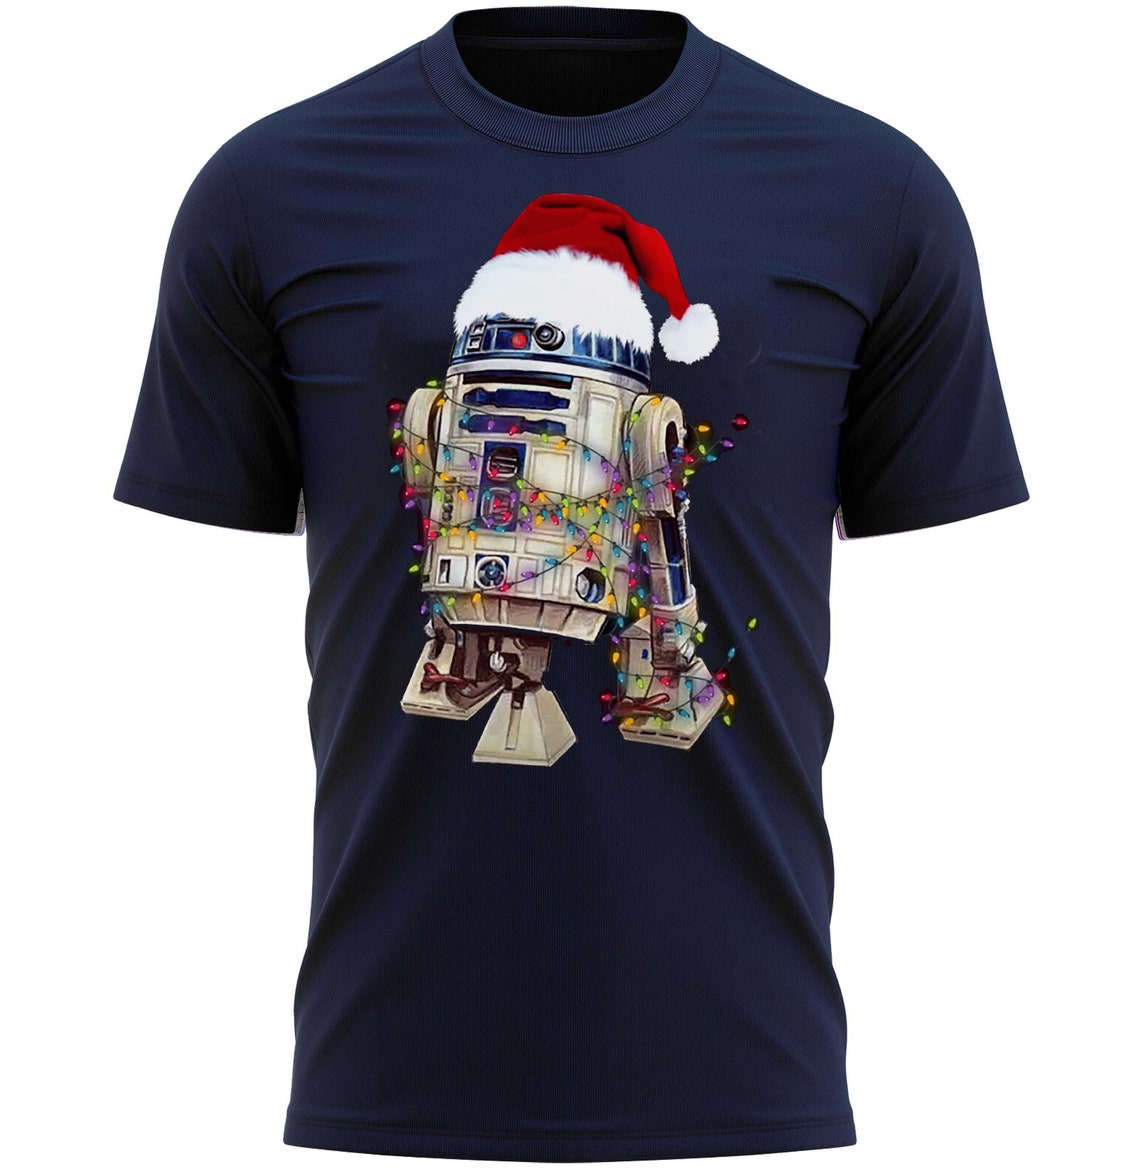 R2D2 Christmas Lights T-Shirt Xmas Tee Shirt Gift Present